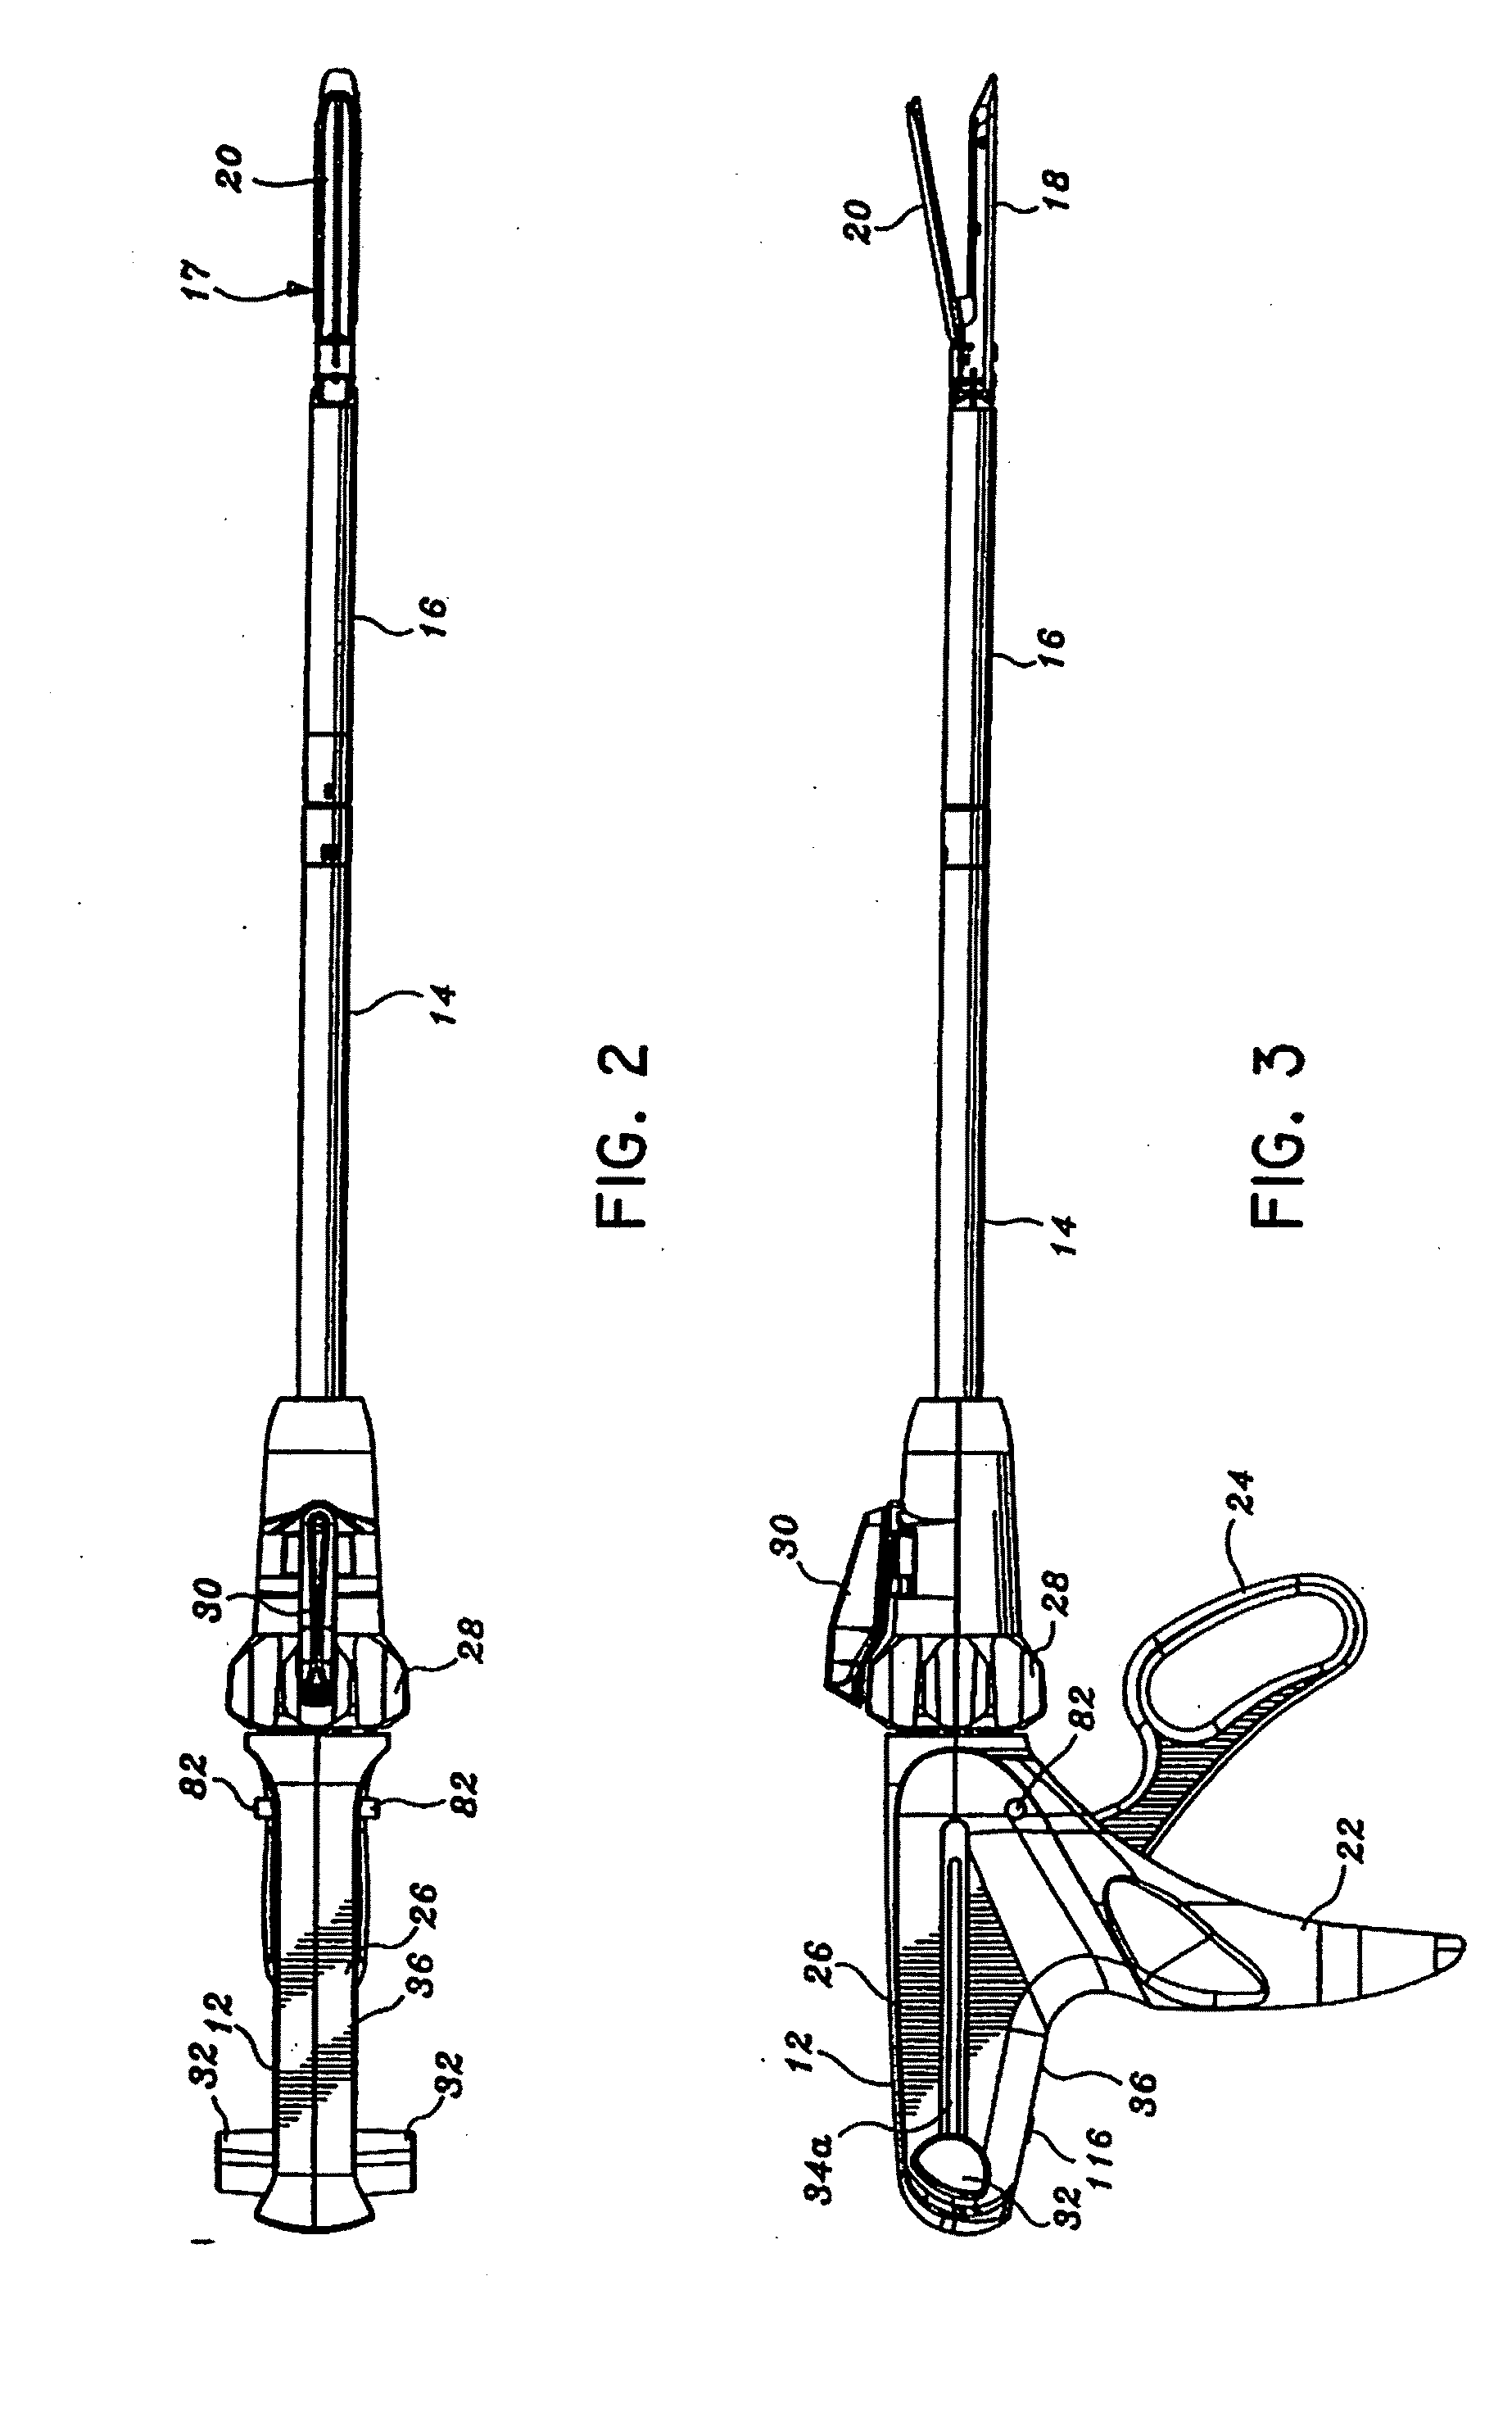 Surgical Stapling Apparatus